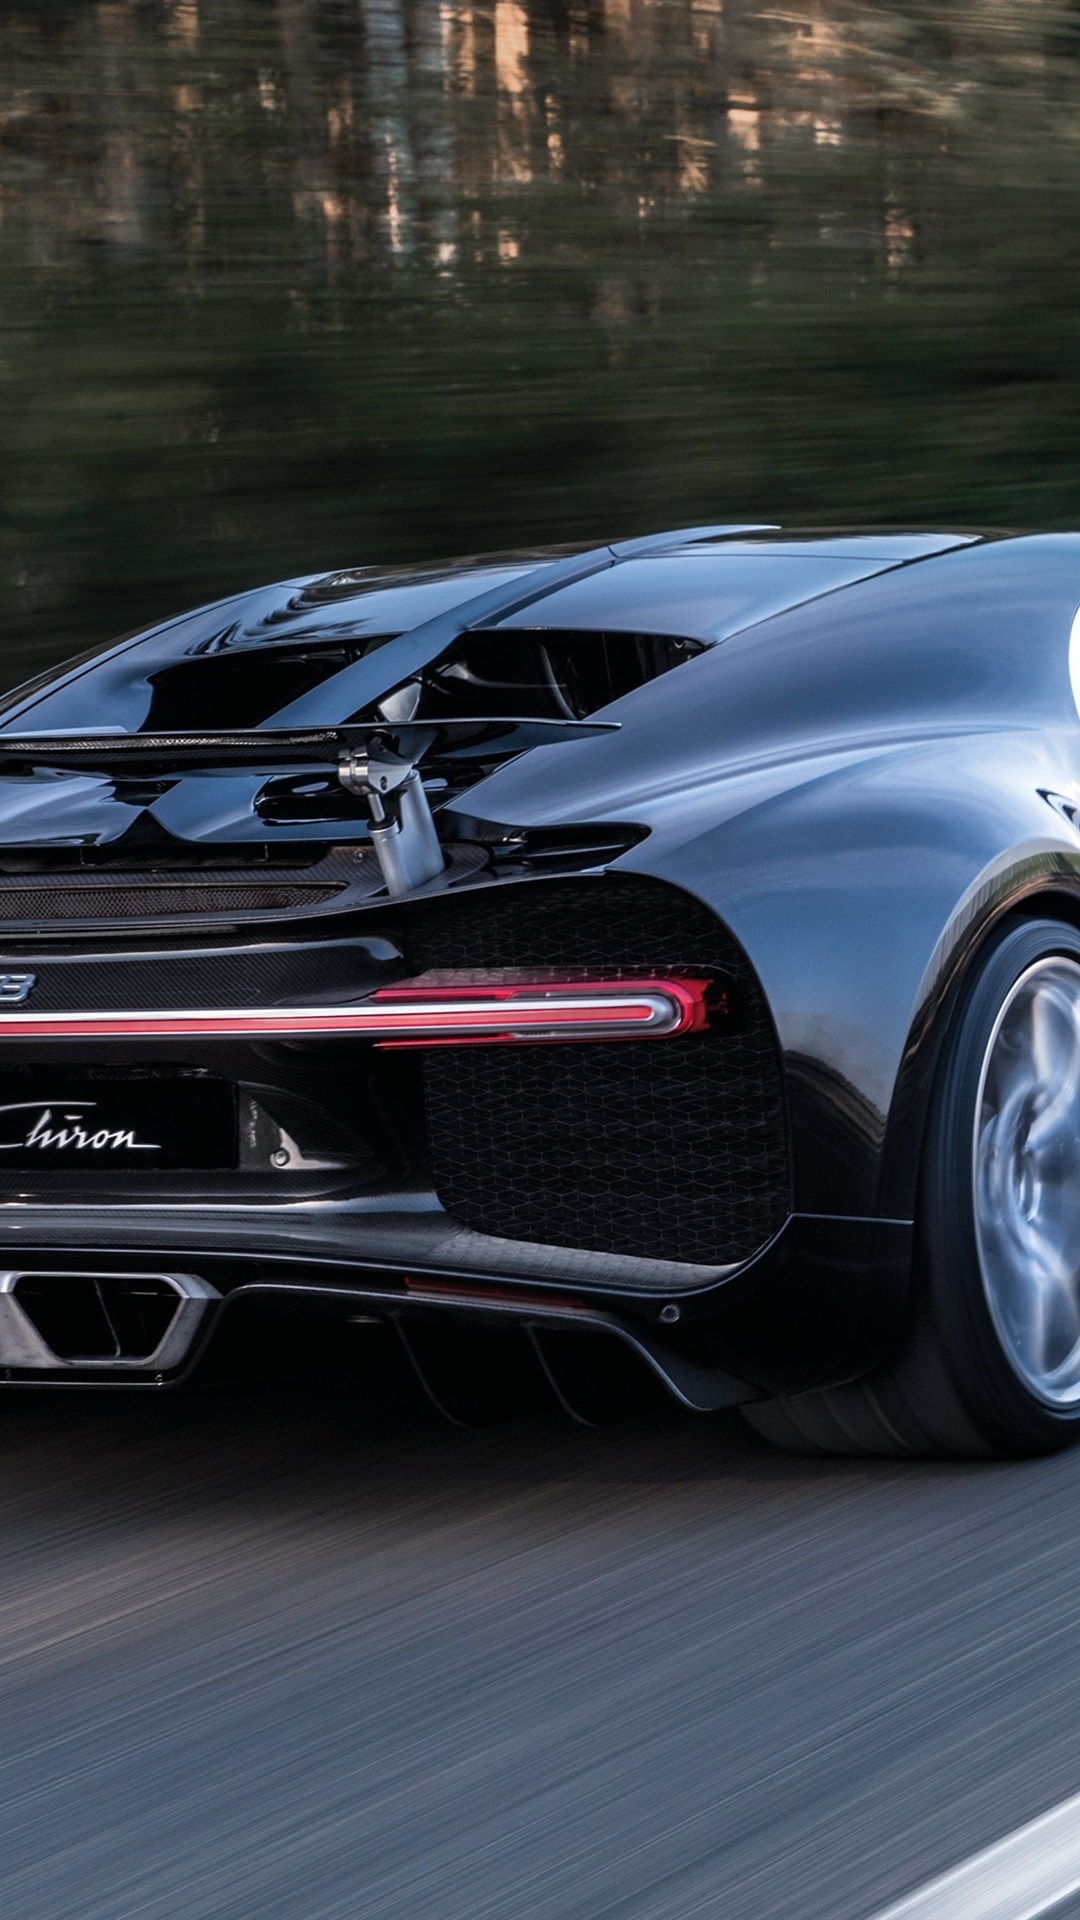 Bugatti chiron black supercar back view x iphone s plus wallpaper background picture image